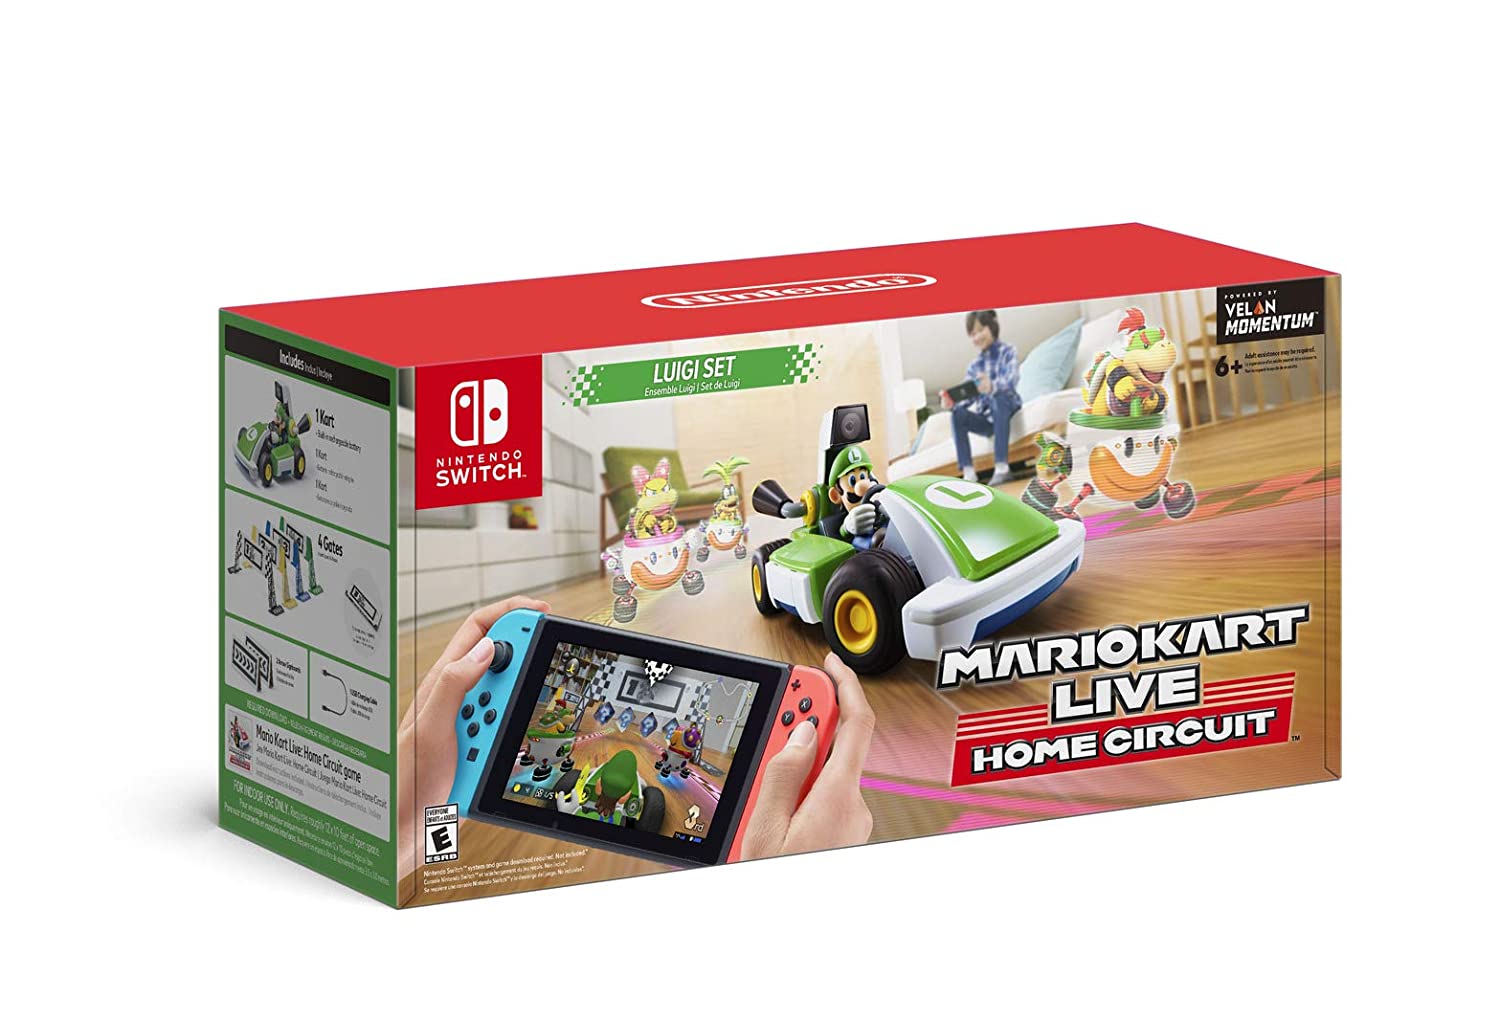 Mario Kart Live: Home Circuit™ - Luigi™ Set, Nintendo, Nintendo Switch 00045496882846 - image 1 of 3